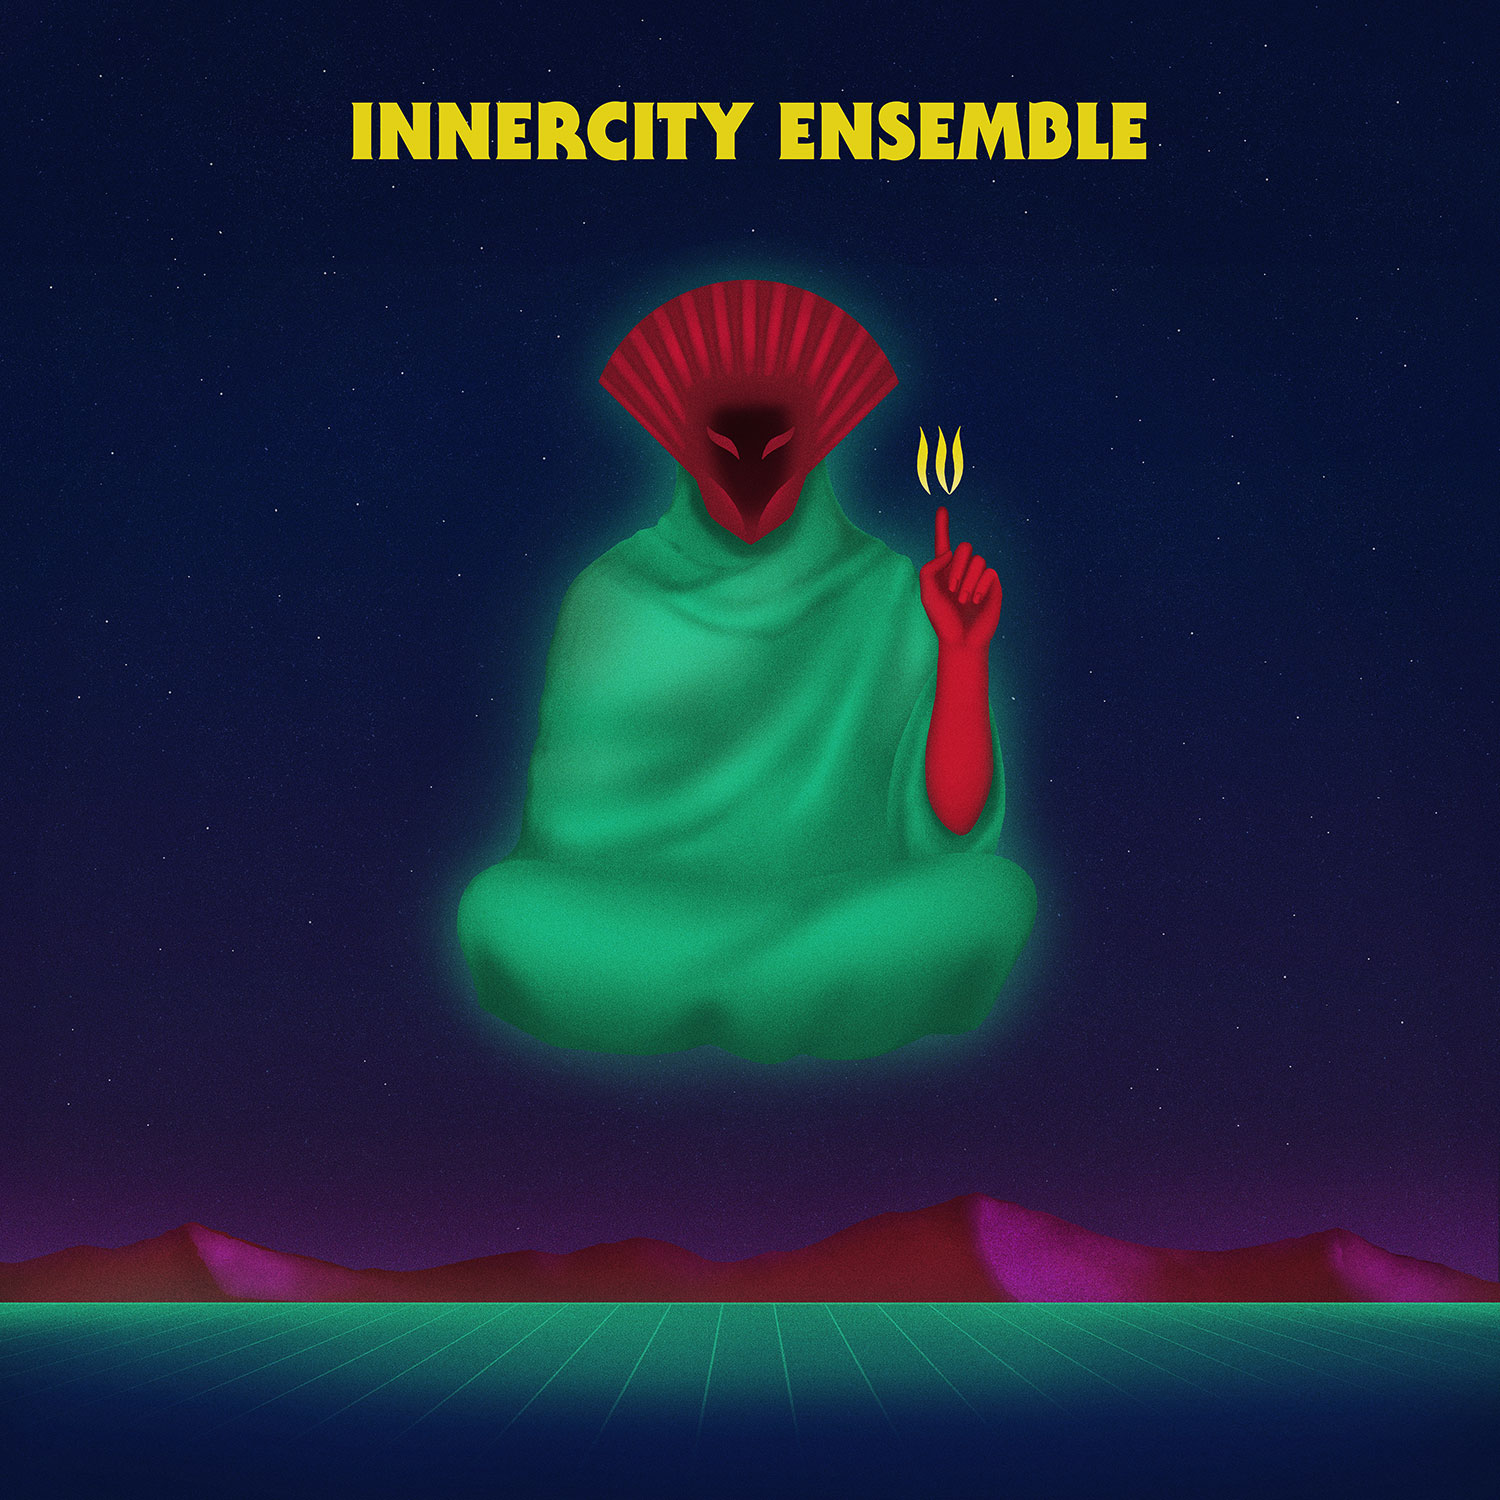 Innercity Ensemble - IV by Hanna Cieślak